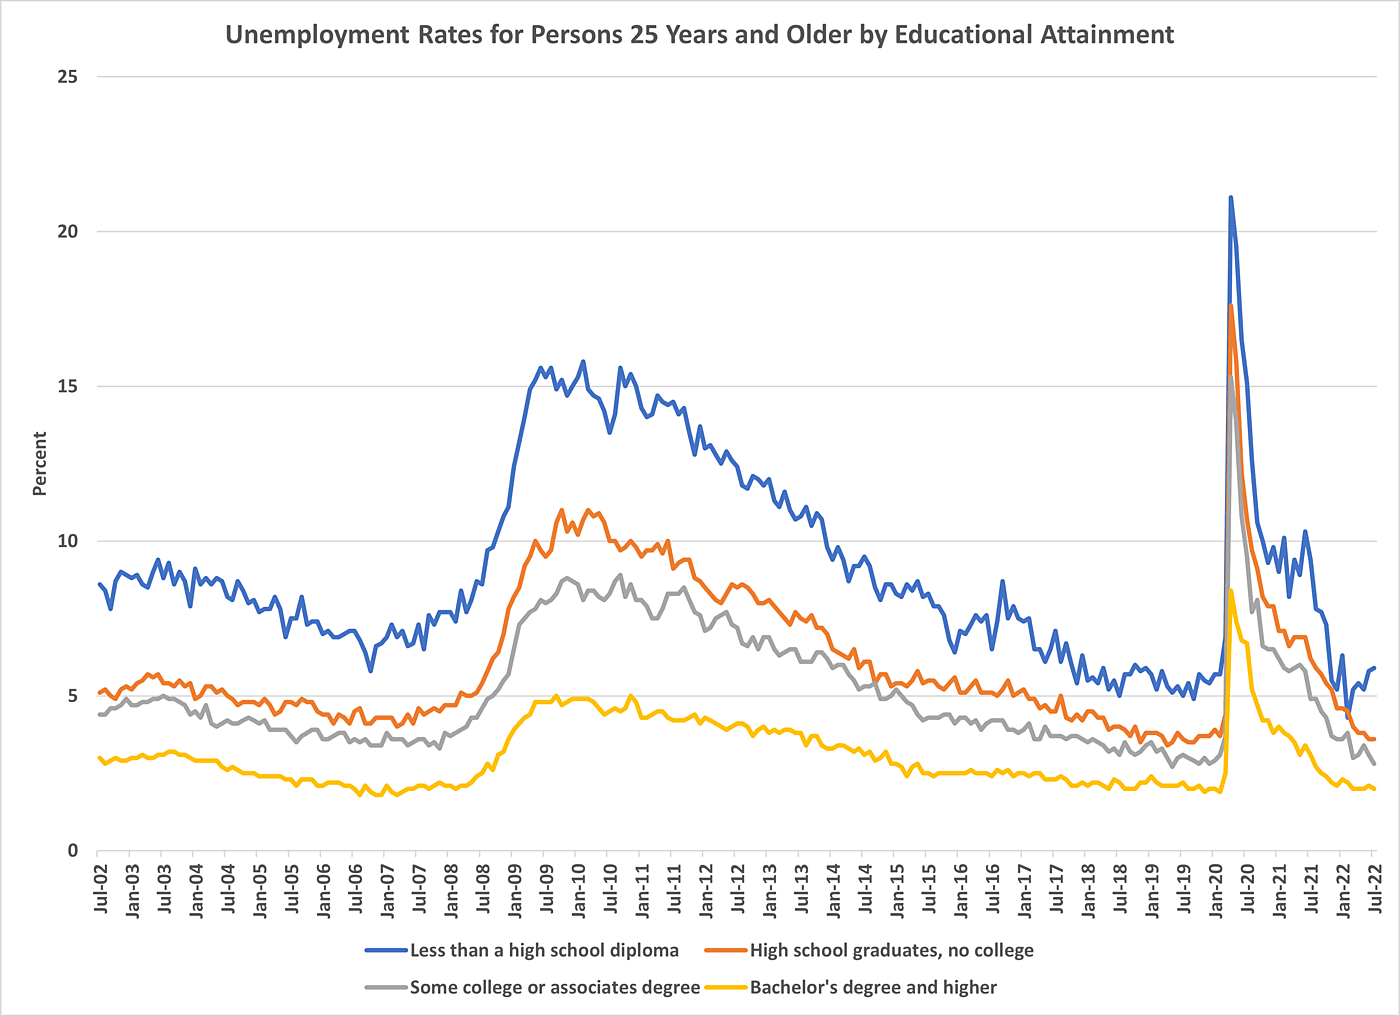 Unemployment rates by education level